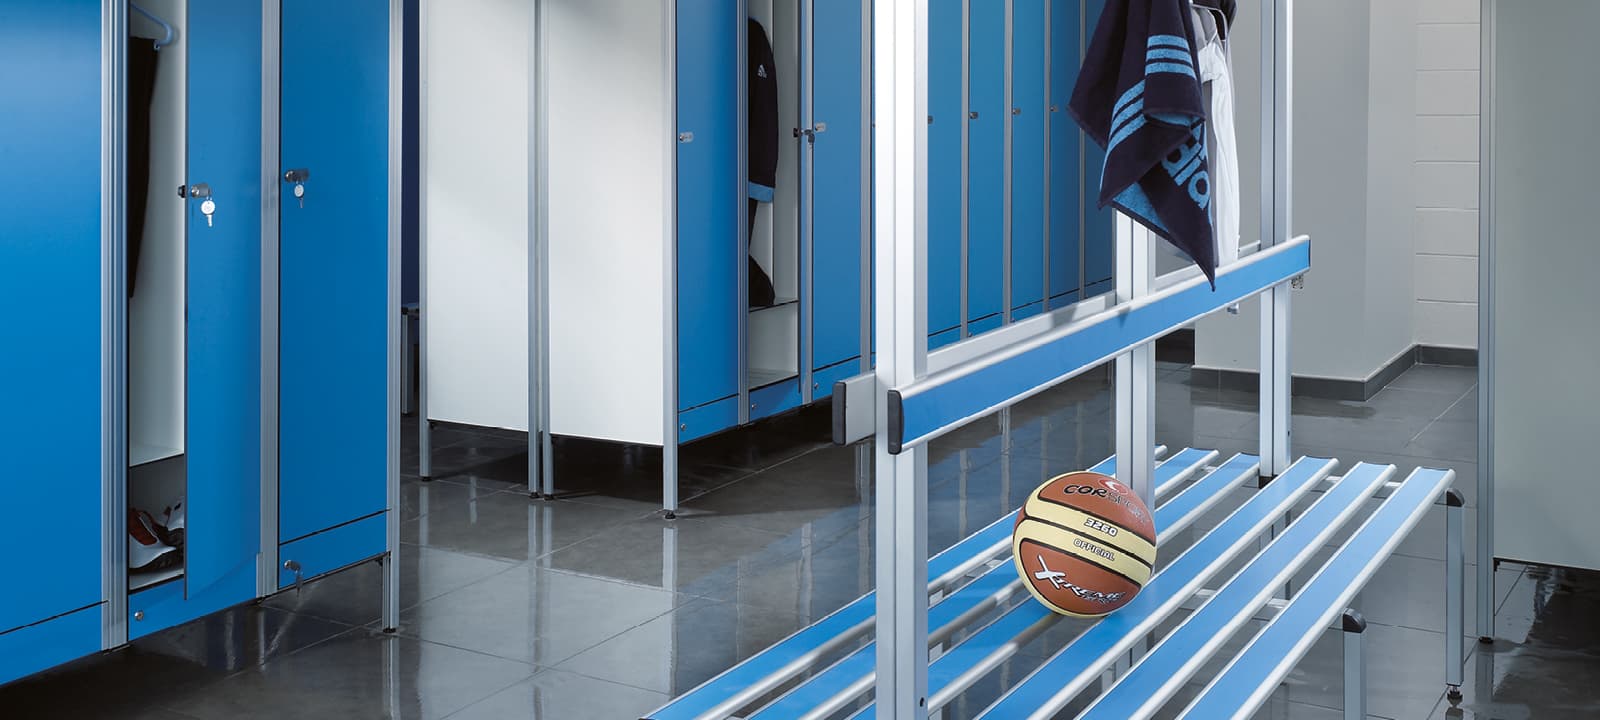 Lockers rooms for sports environments: choose Soema